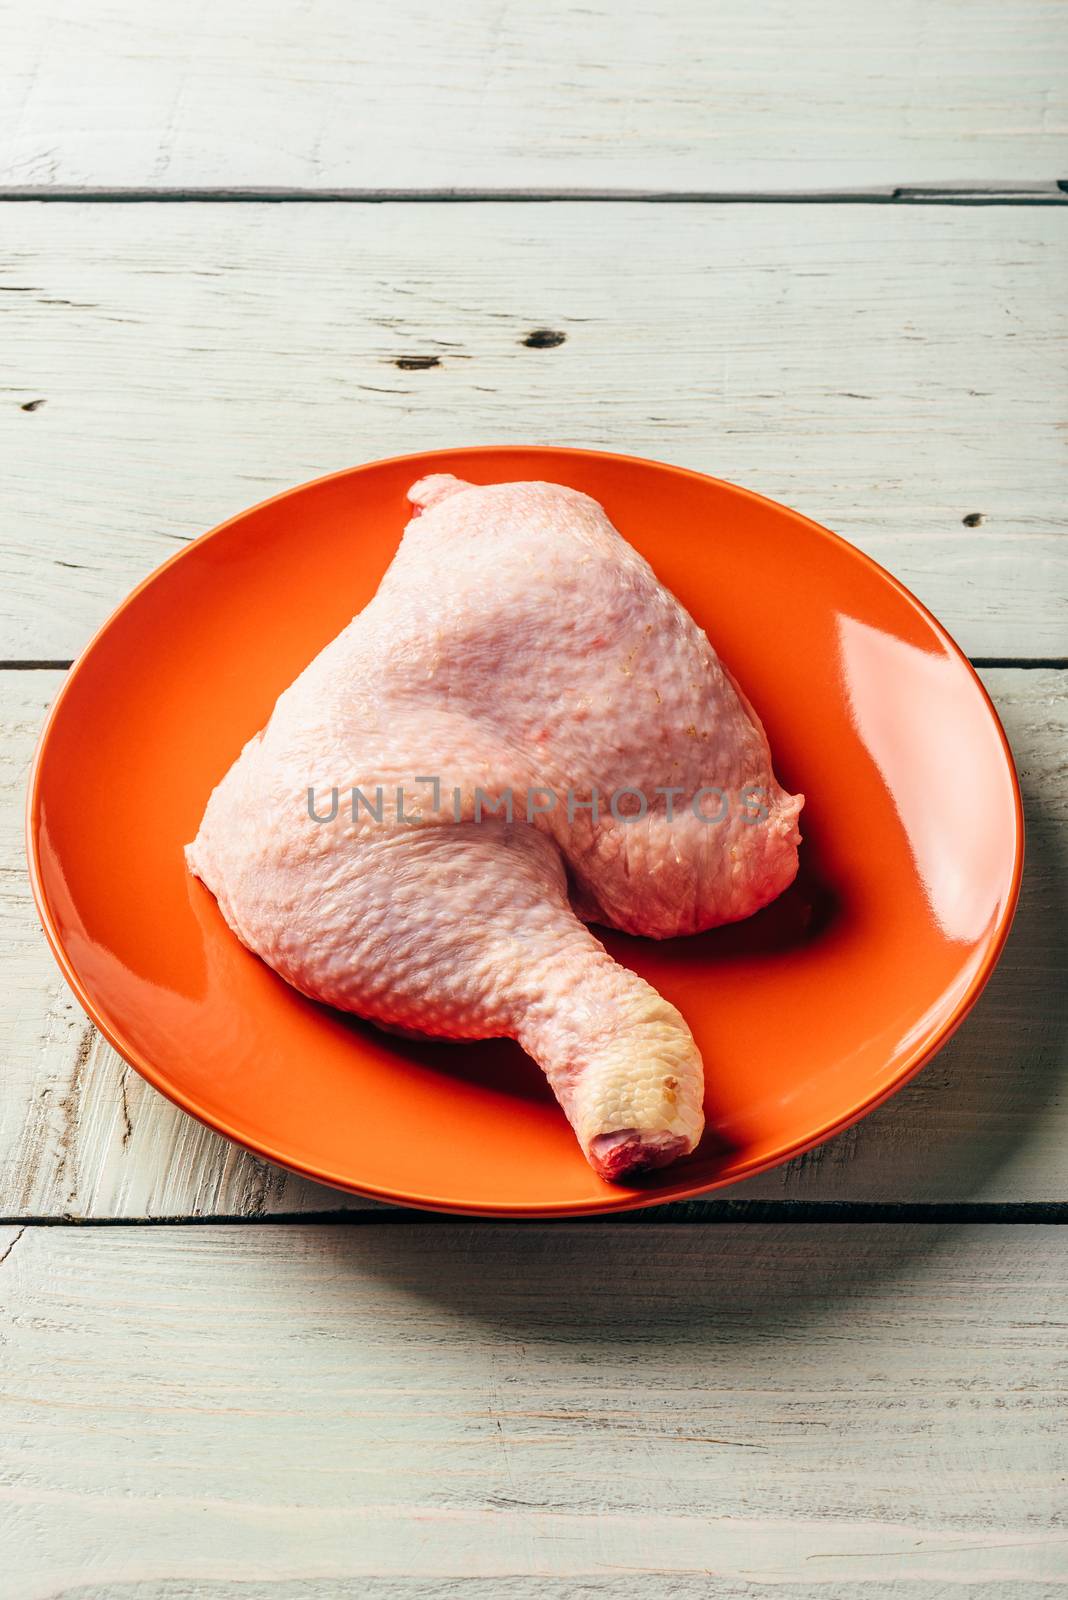 Chicken leg on orange plate by Seva_blsv